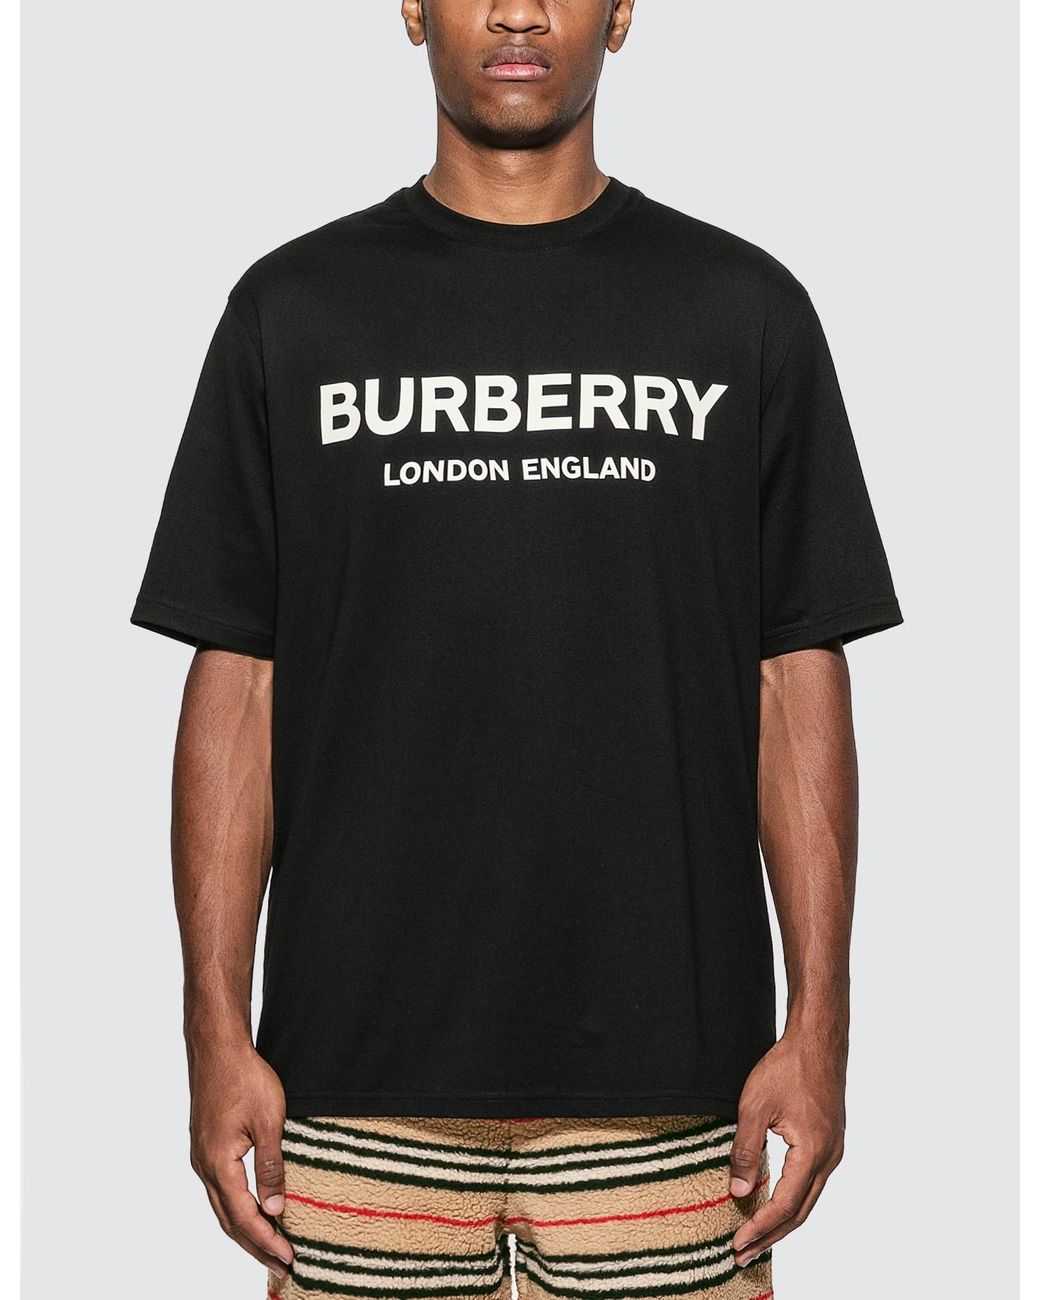 Burberry Logo Print Cotton T-shirt in Black for Men - Lyst